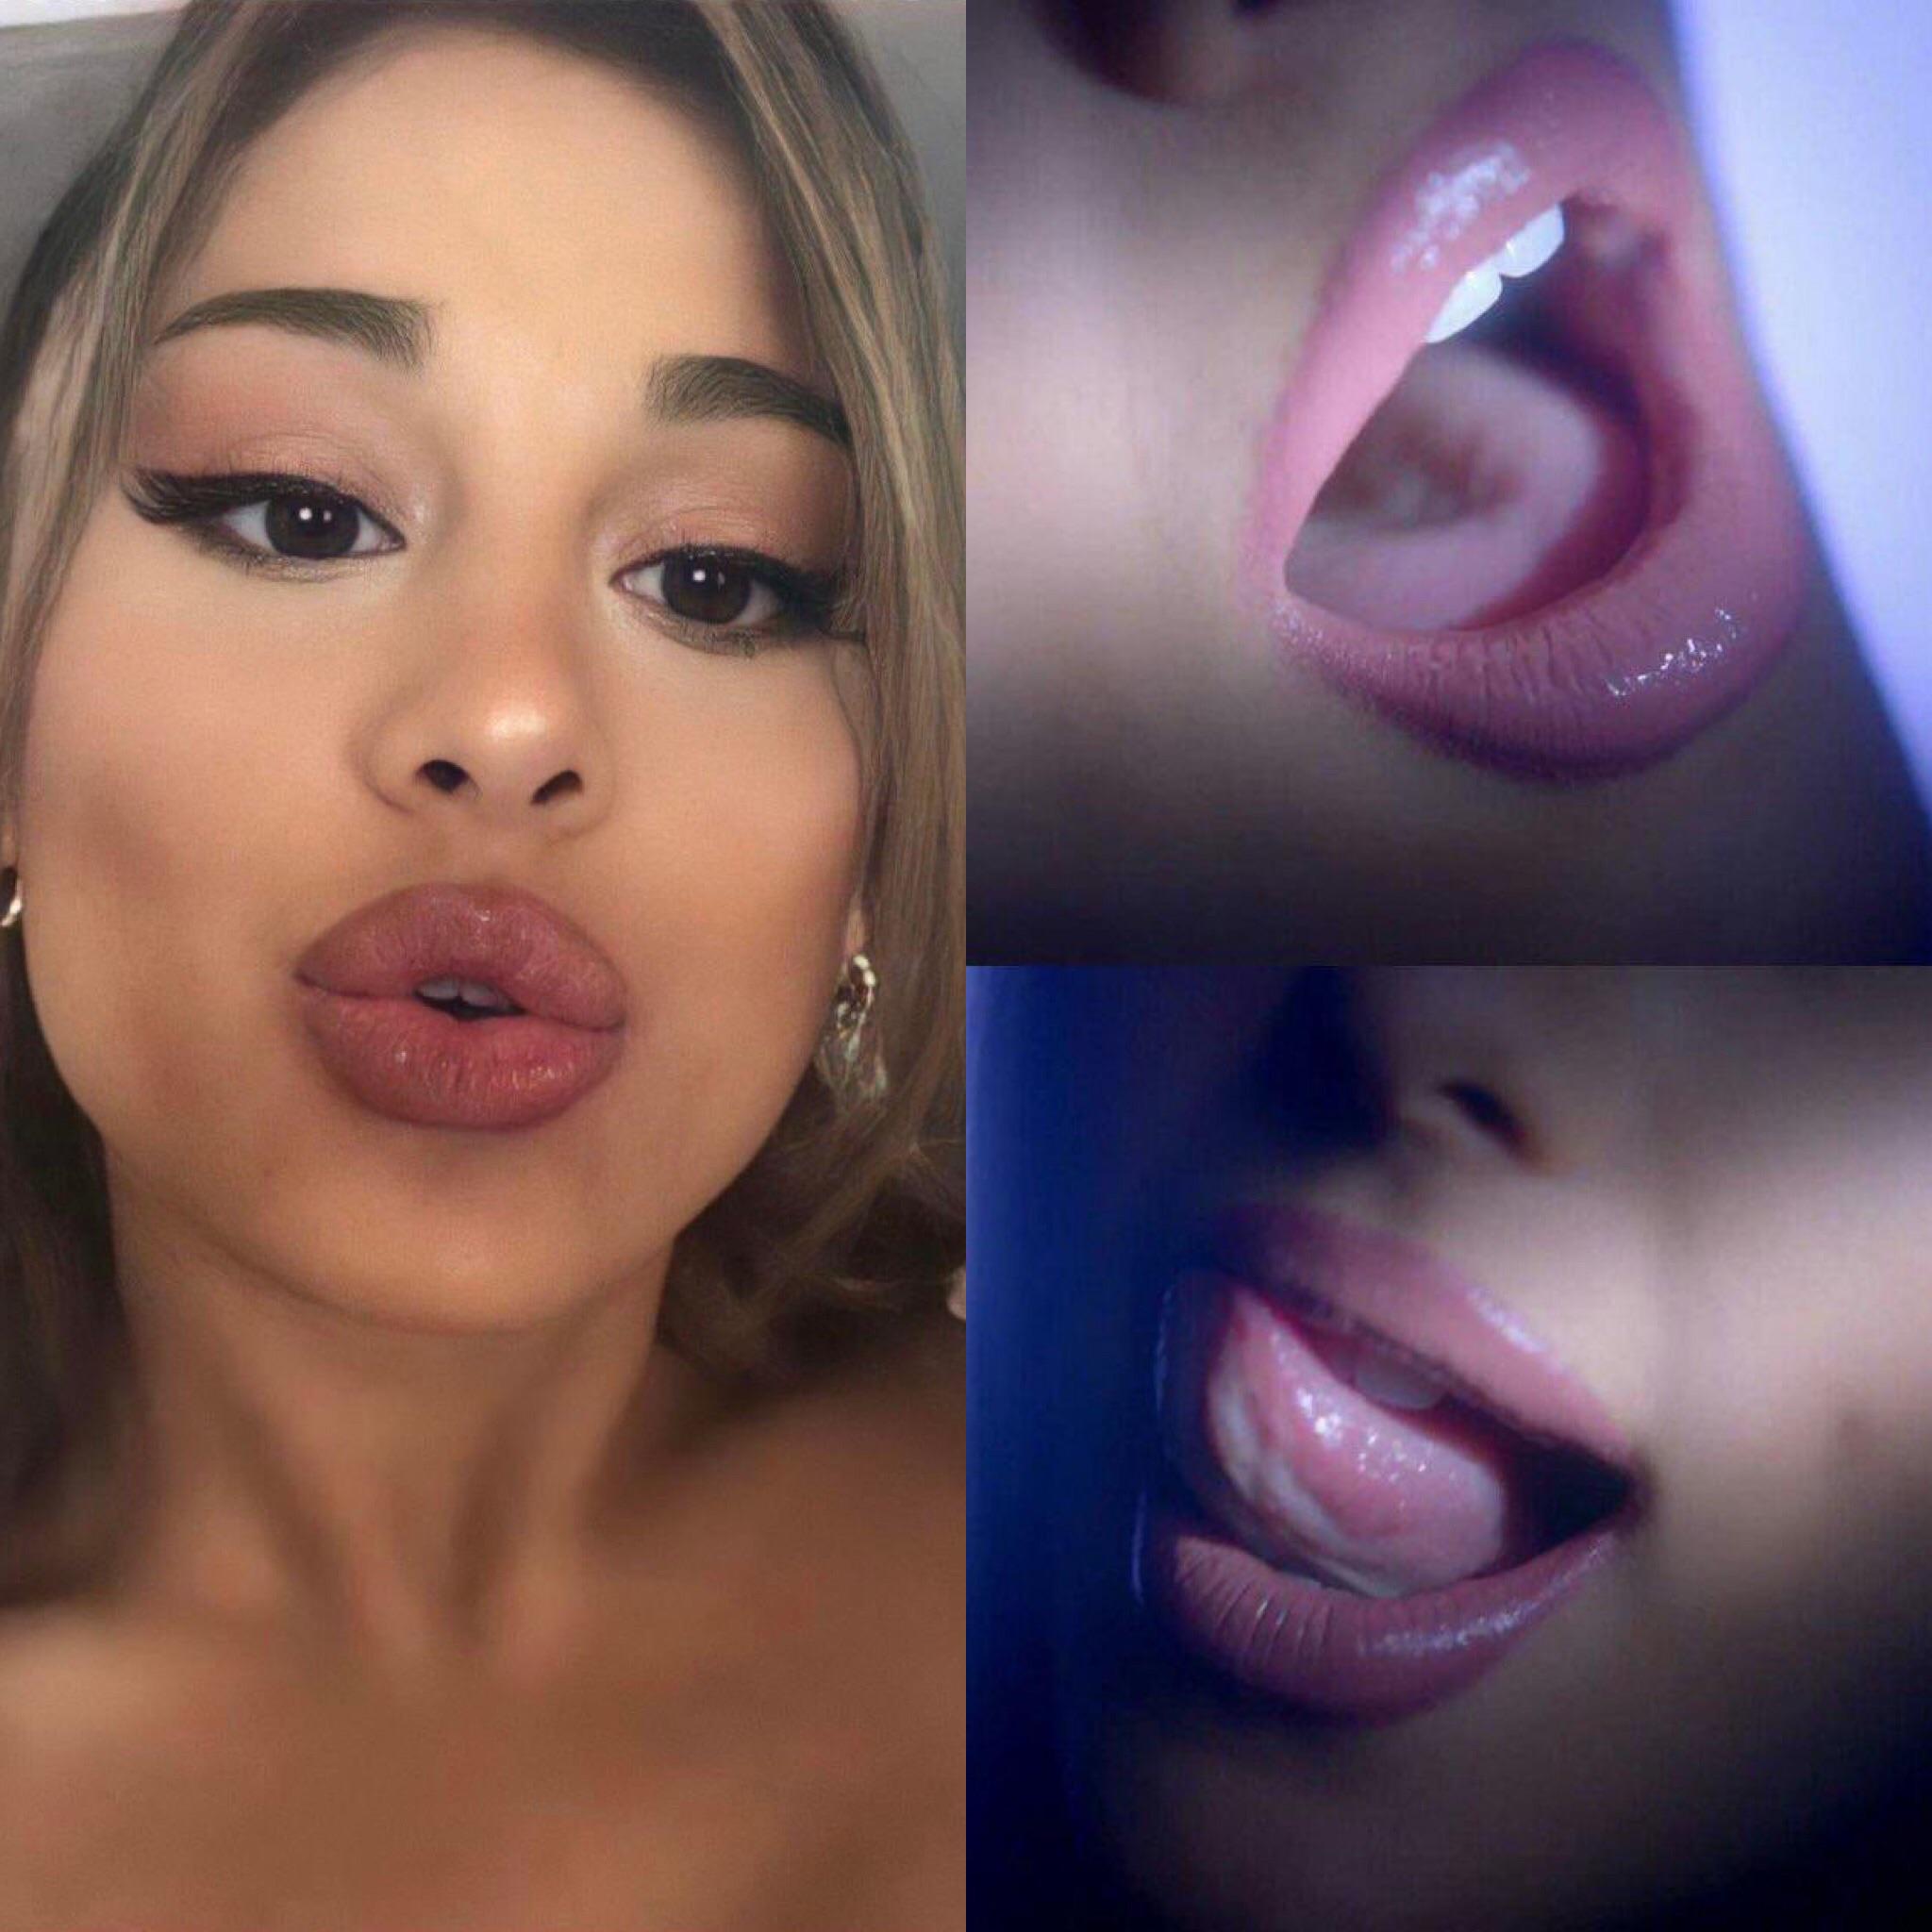 Ariana Grandes lips are perfect